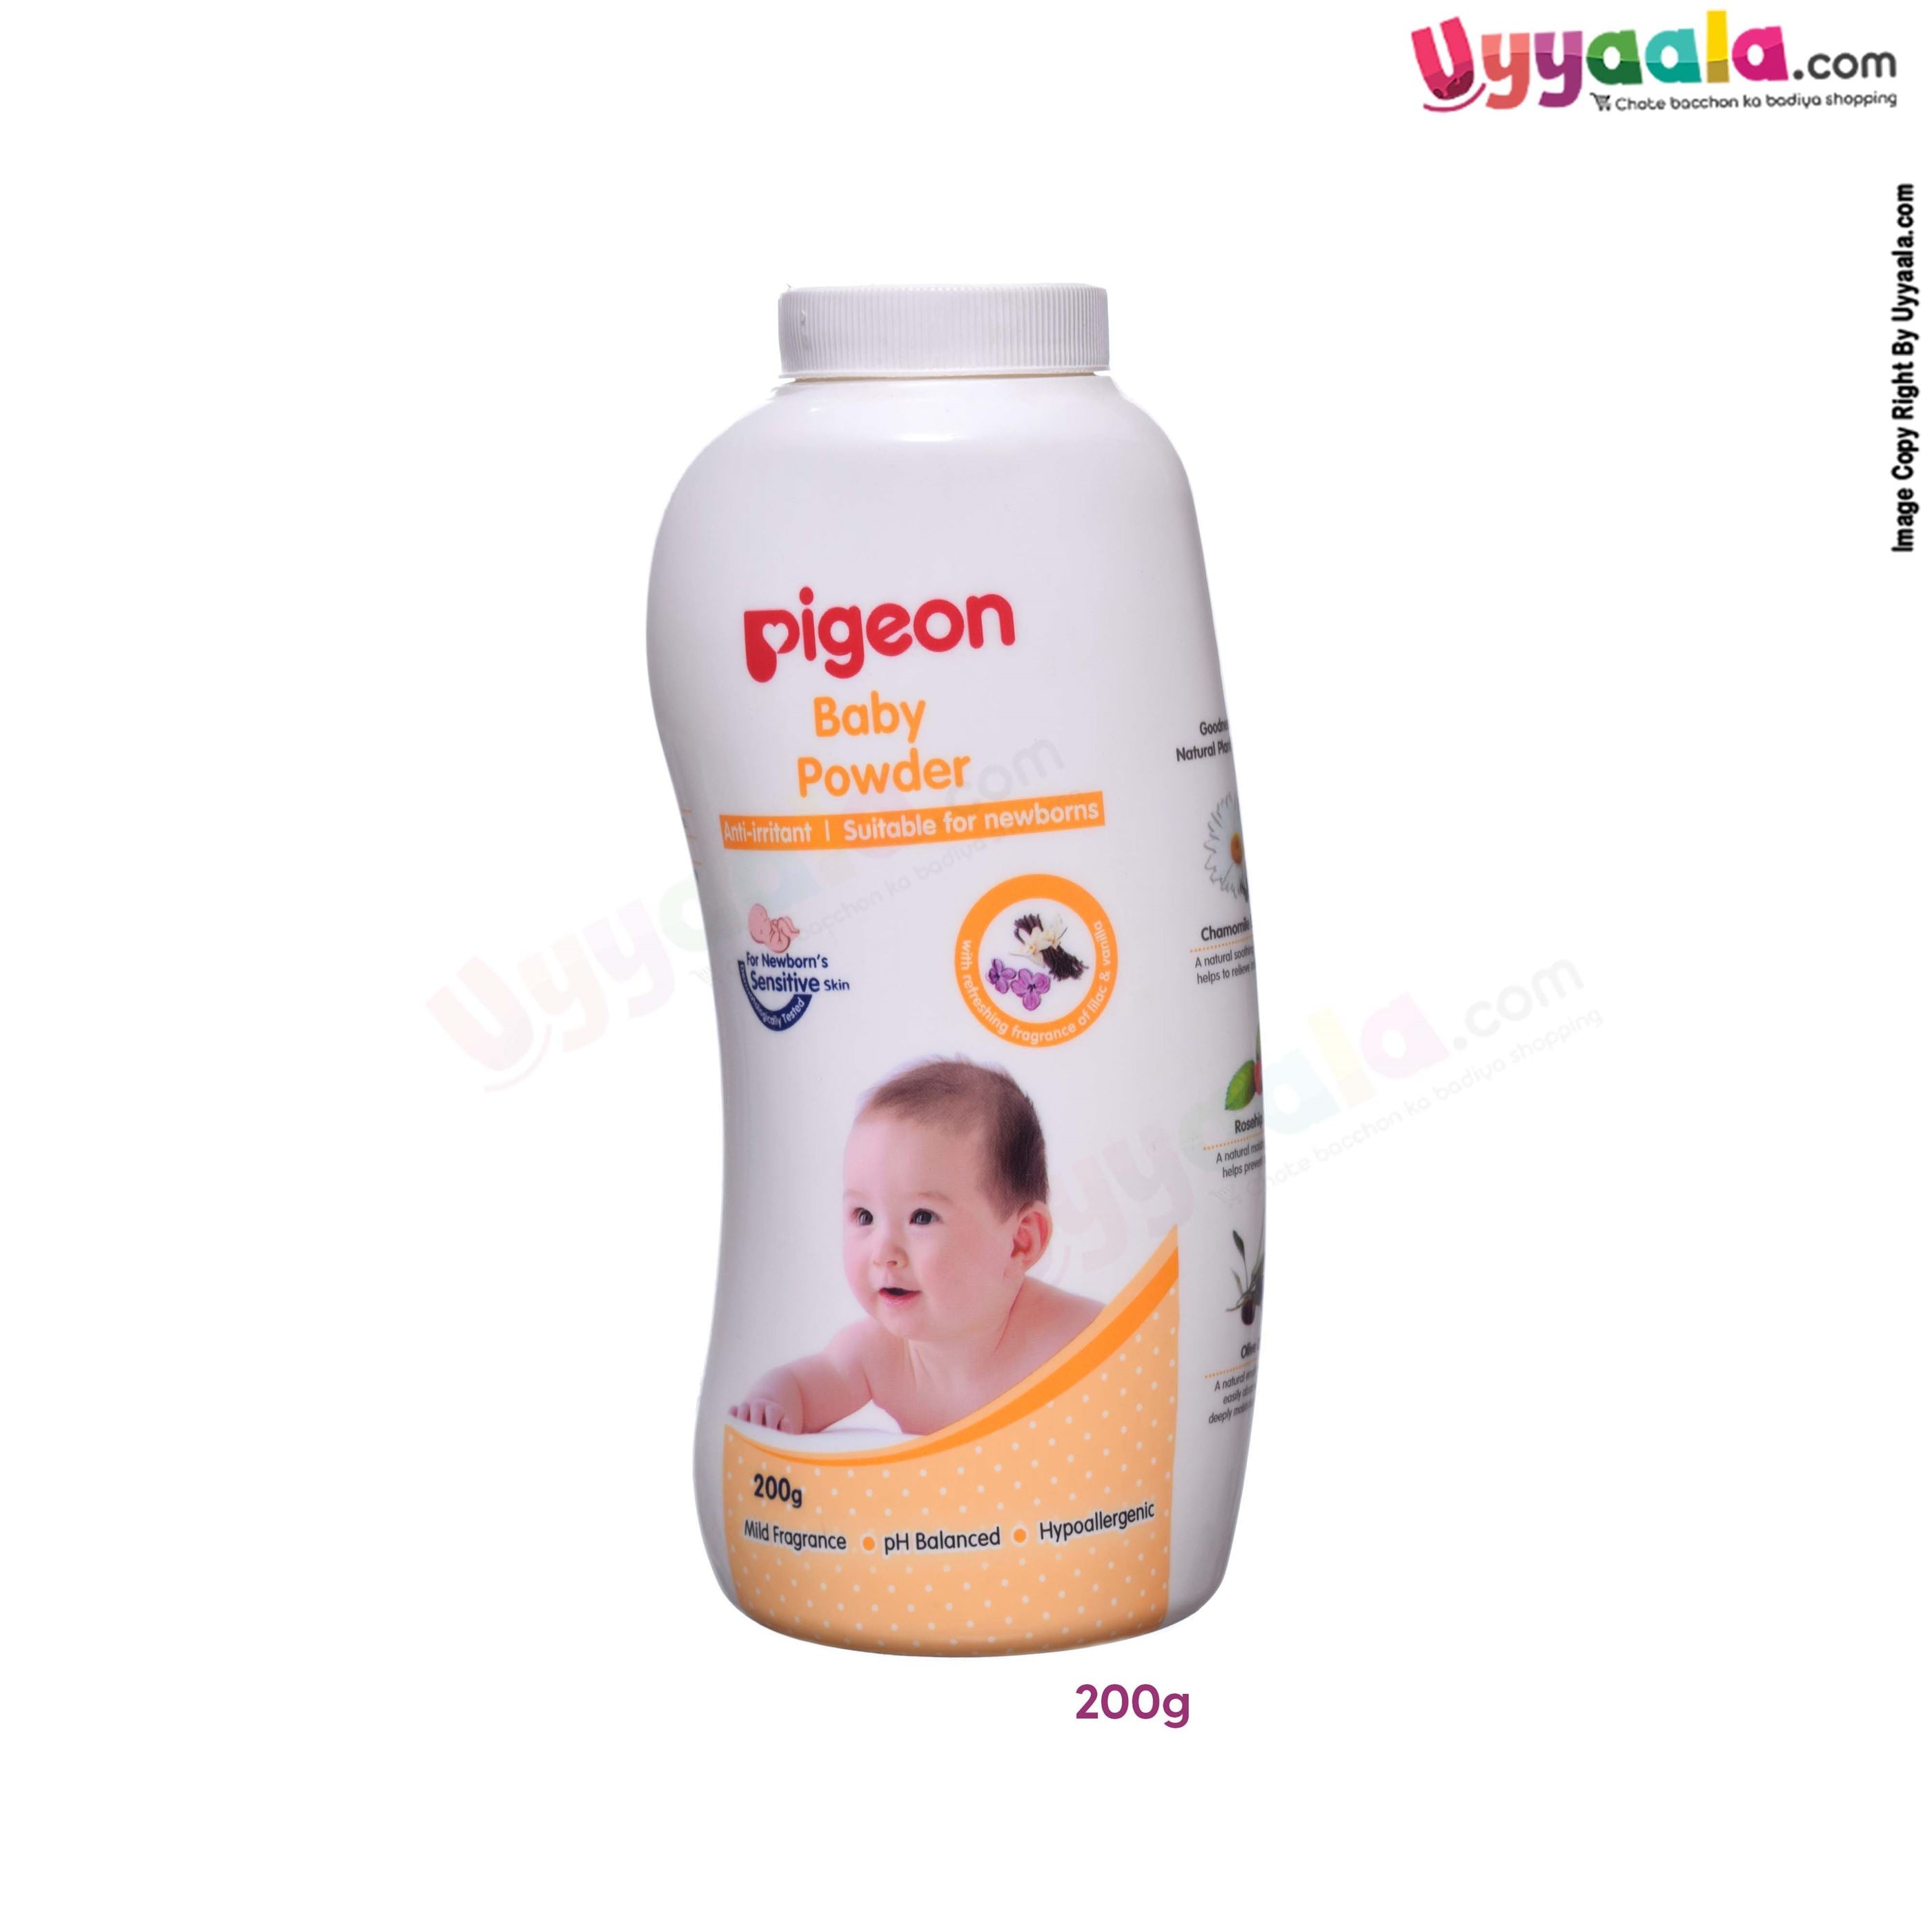 PIGEON Anti-irritant baby powder for newborn babies